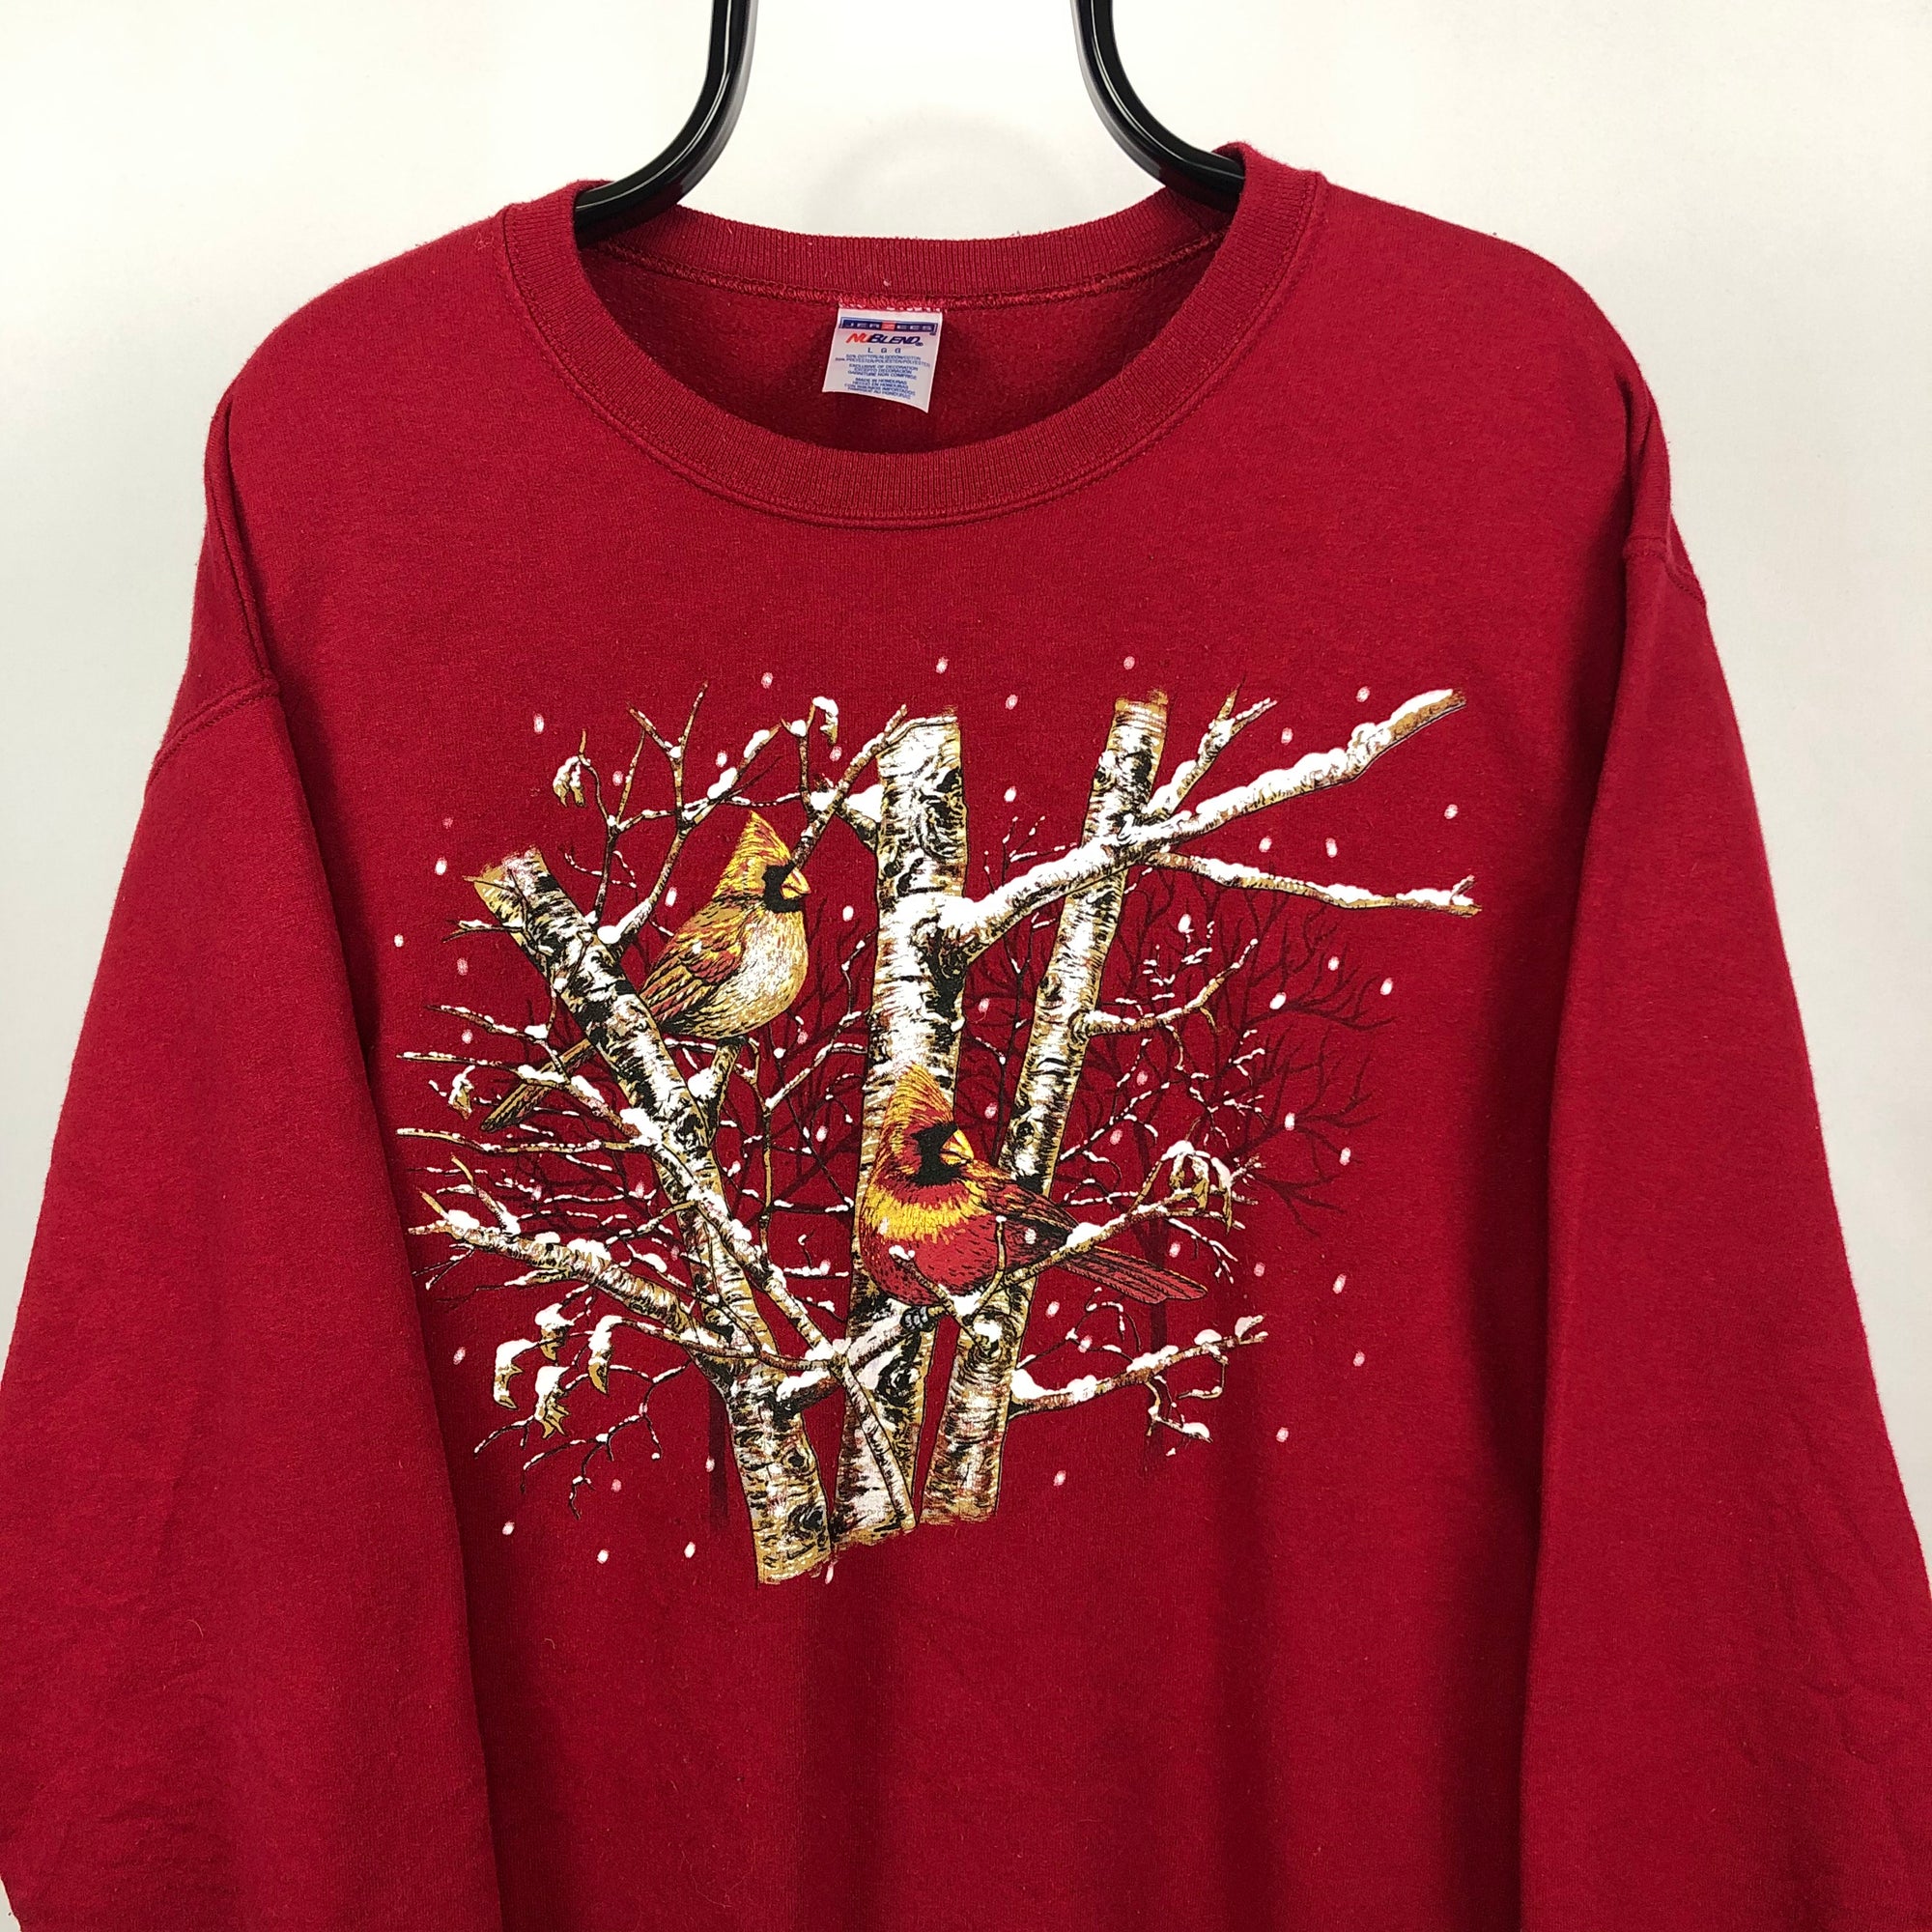 Vintage 'Birds & Trees' Print Sweatshirt in Red - Men's Medium/Women's Large